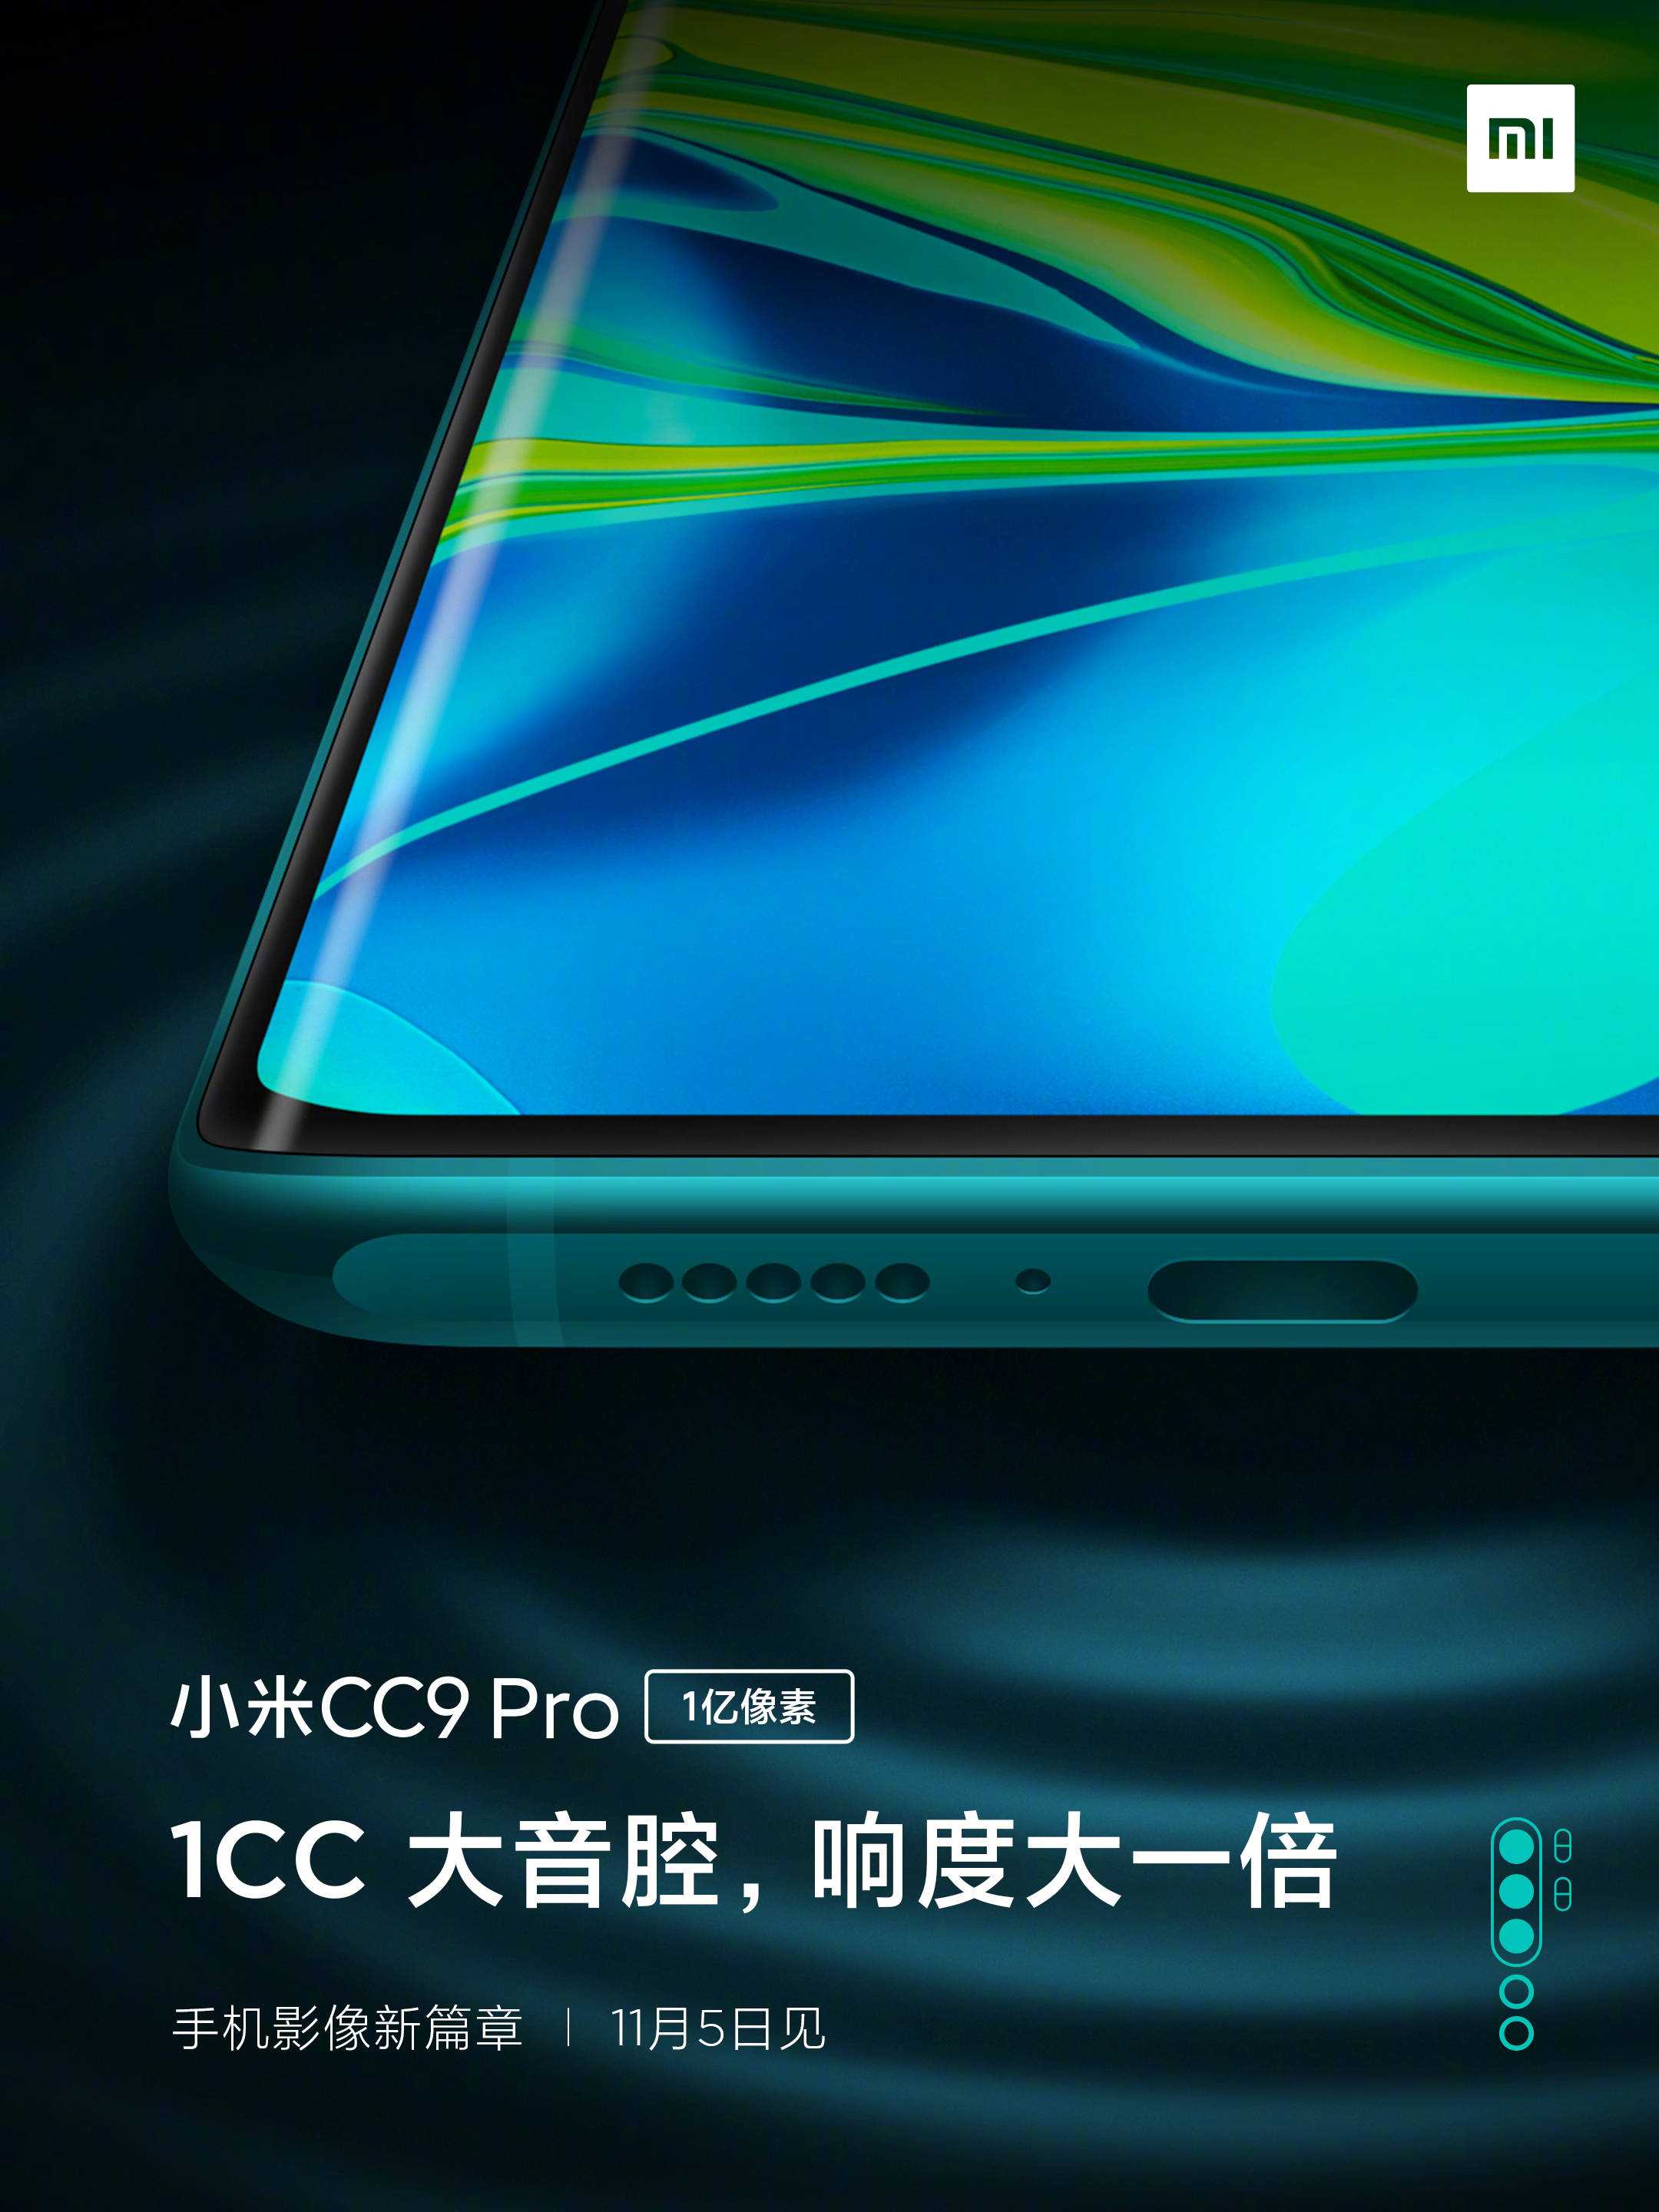 Xiaomi CC9 Pro